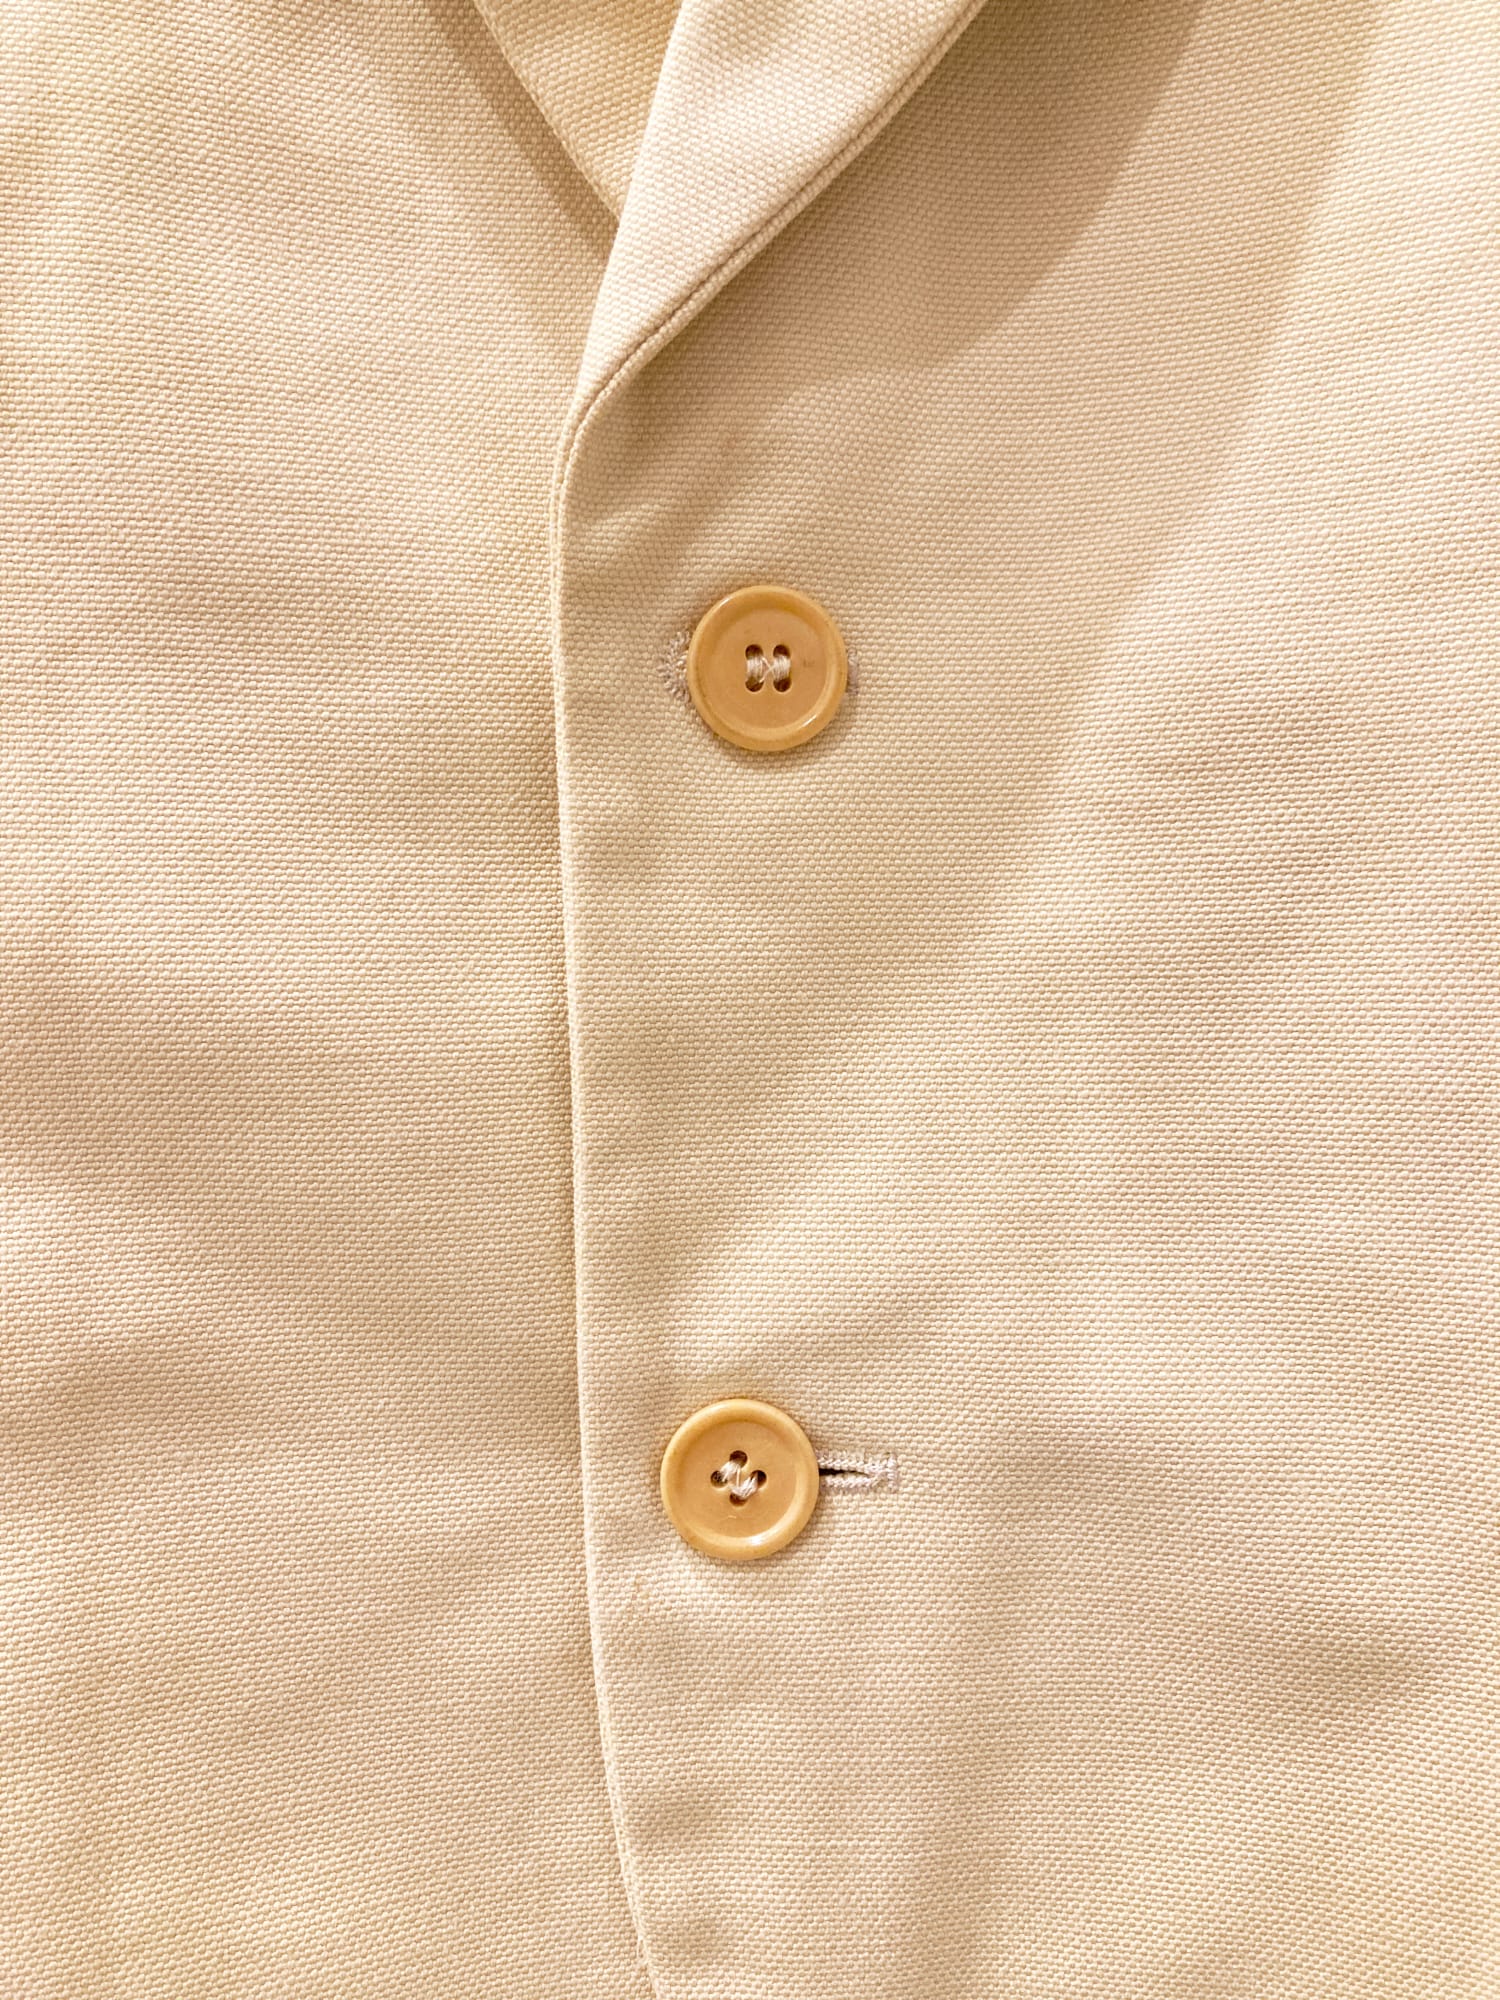 Dirk Bikkembergs Hommes 1990s beige cotton canvas waistcoat - size 44 XS